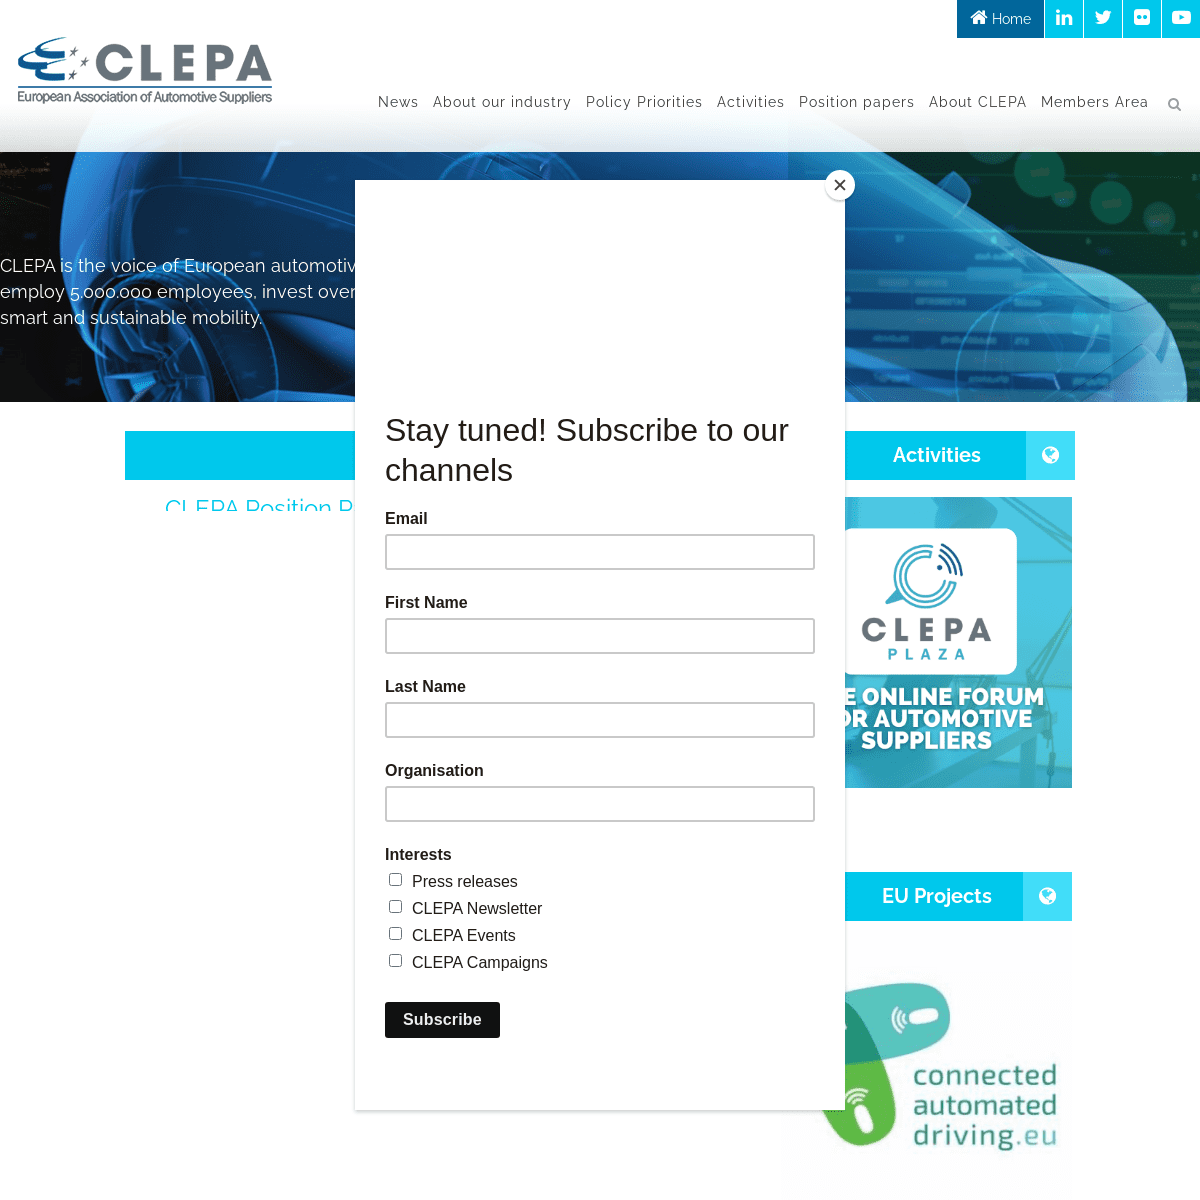 A complete backup of https://clepa.eu